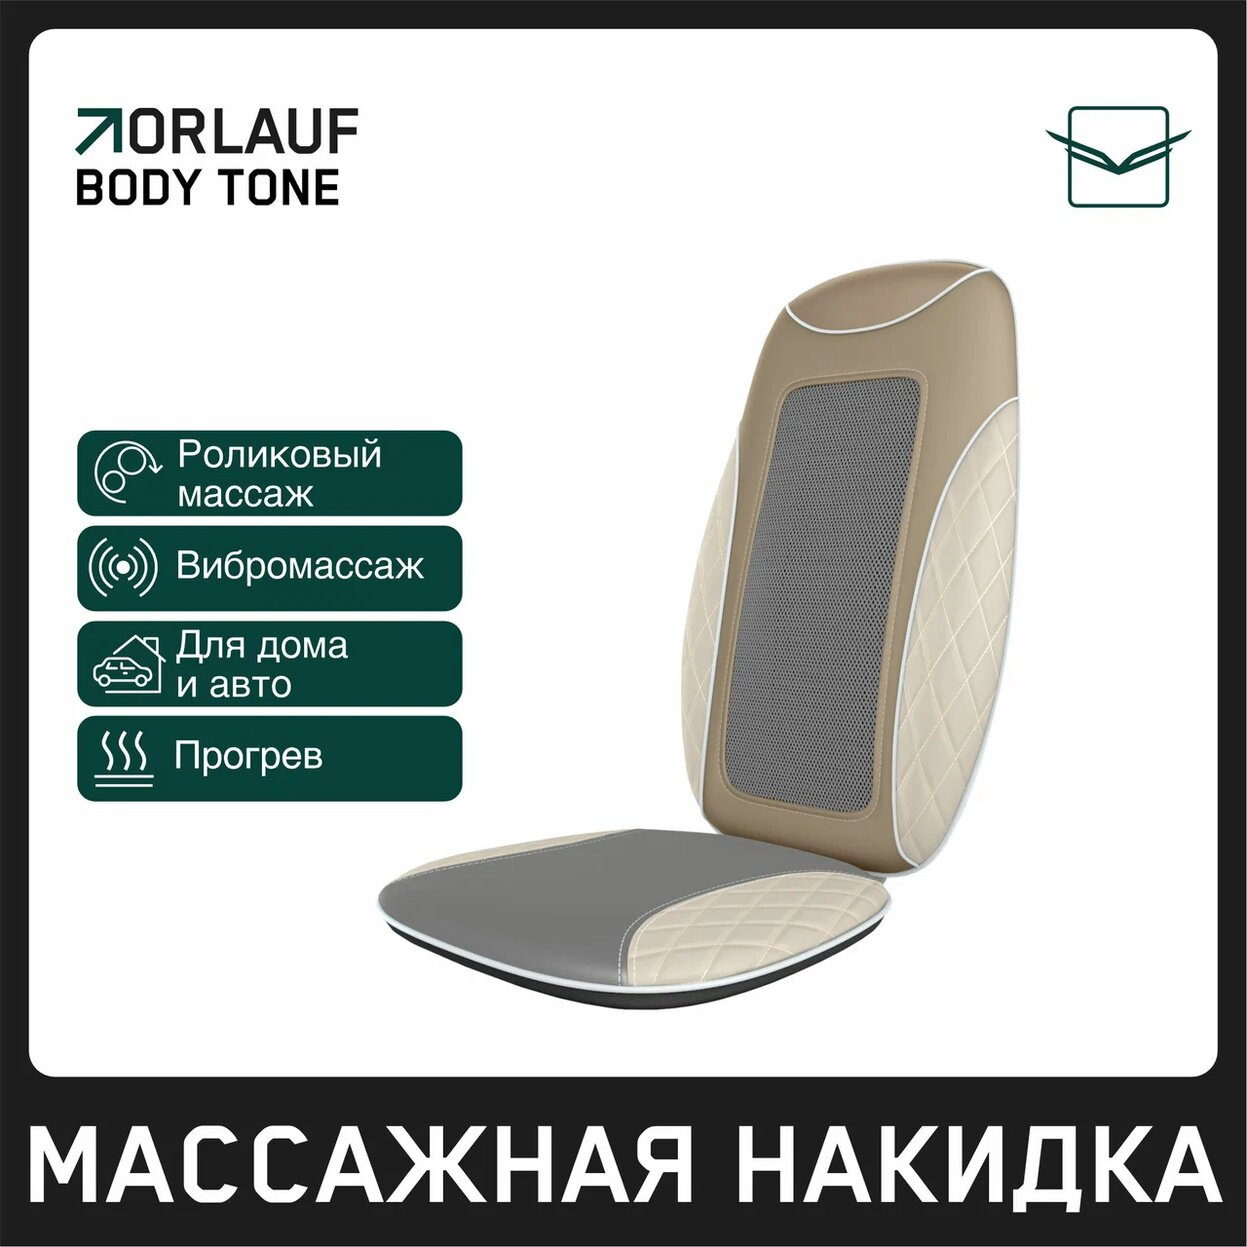 Orlauf Body Tone из каталога устройств для массажа в Волгограде по цене 15400 ₽